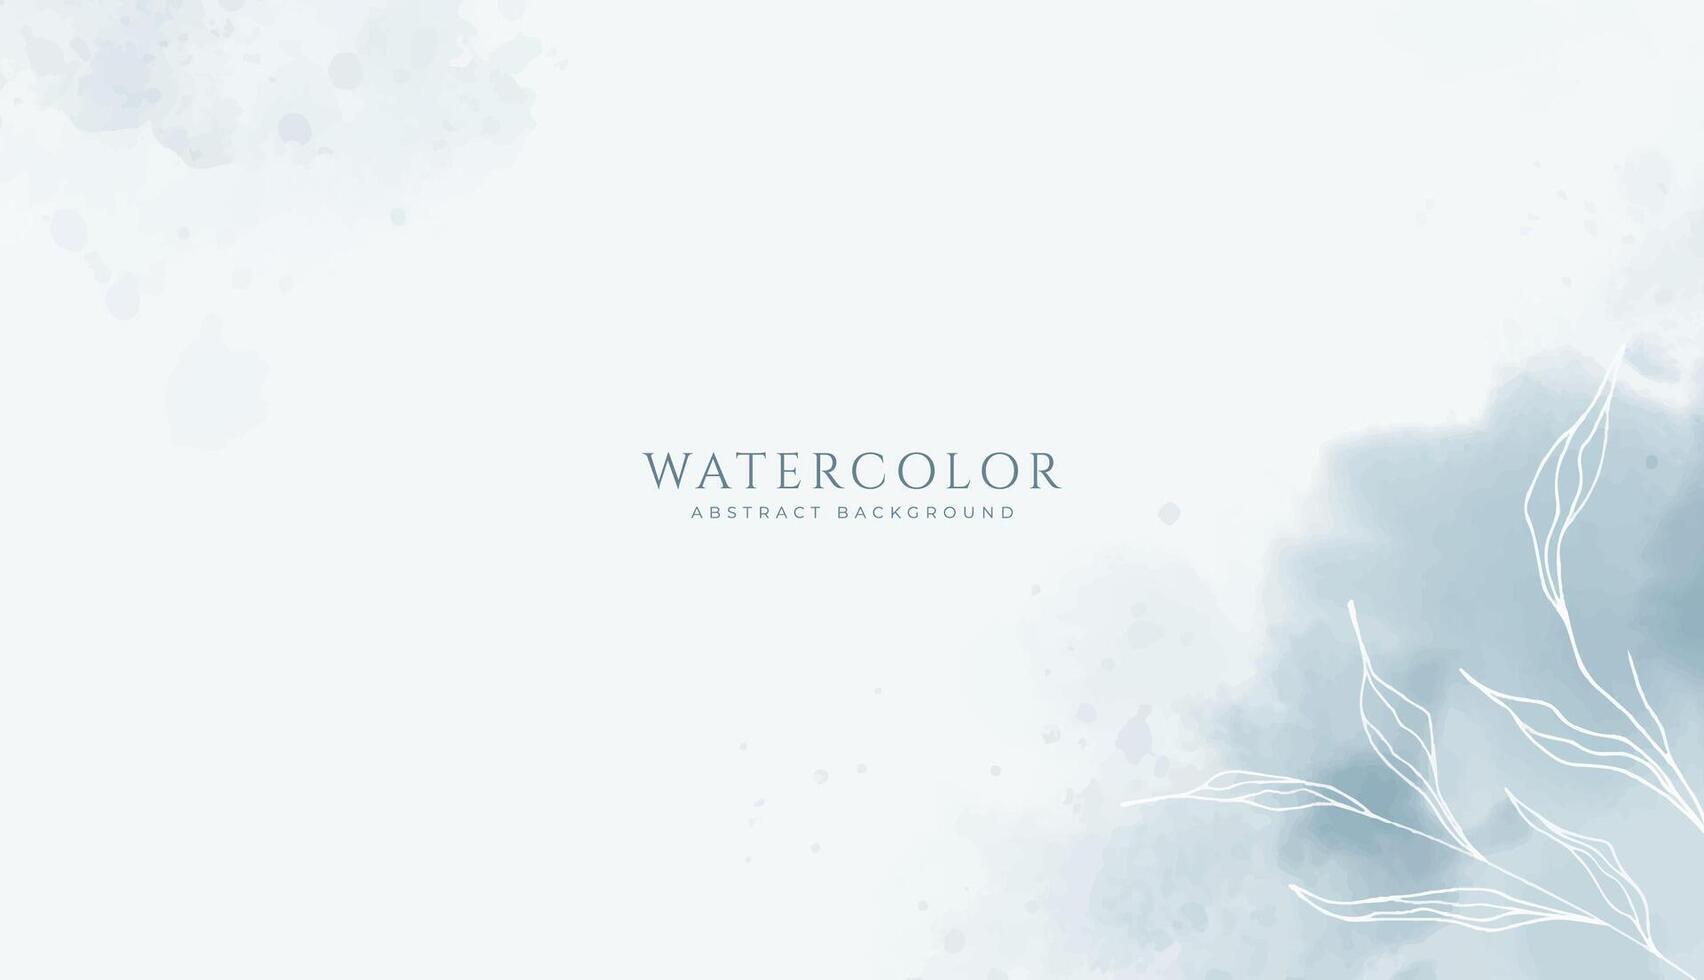 abstract horizontaal waterverf achtergrond. neutrale licht bruin marine blauw gekleurde leeg ruimte achtergrond illustratie vector